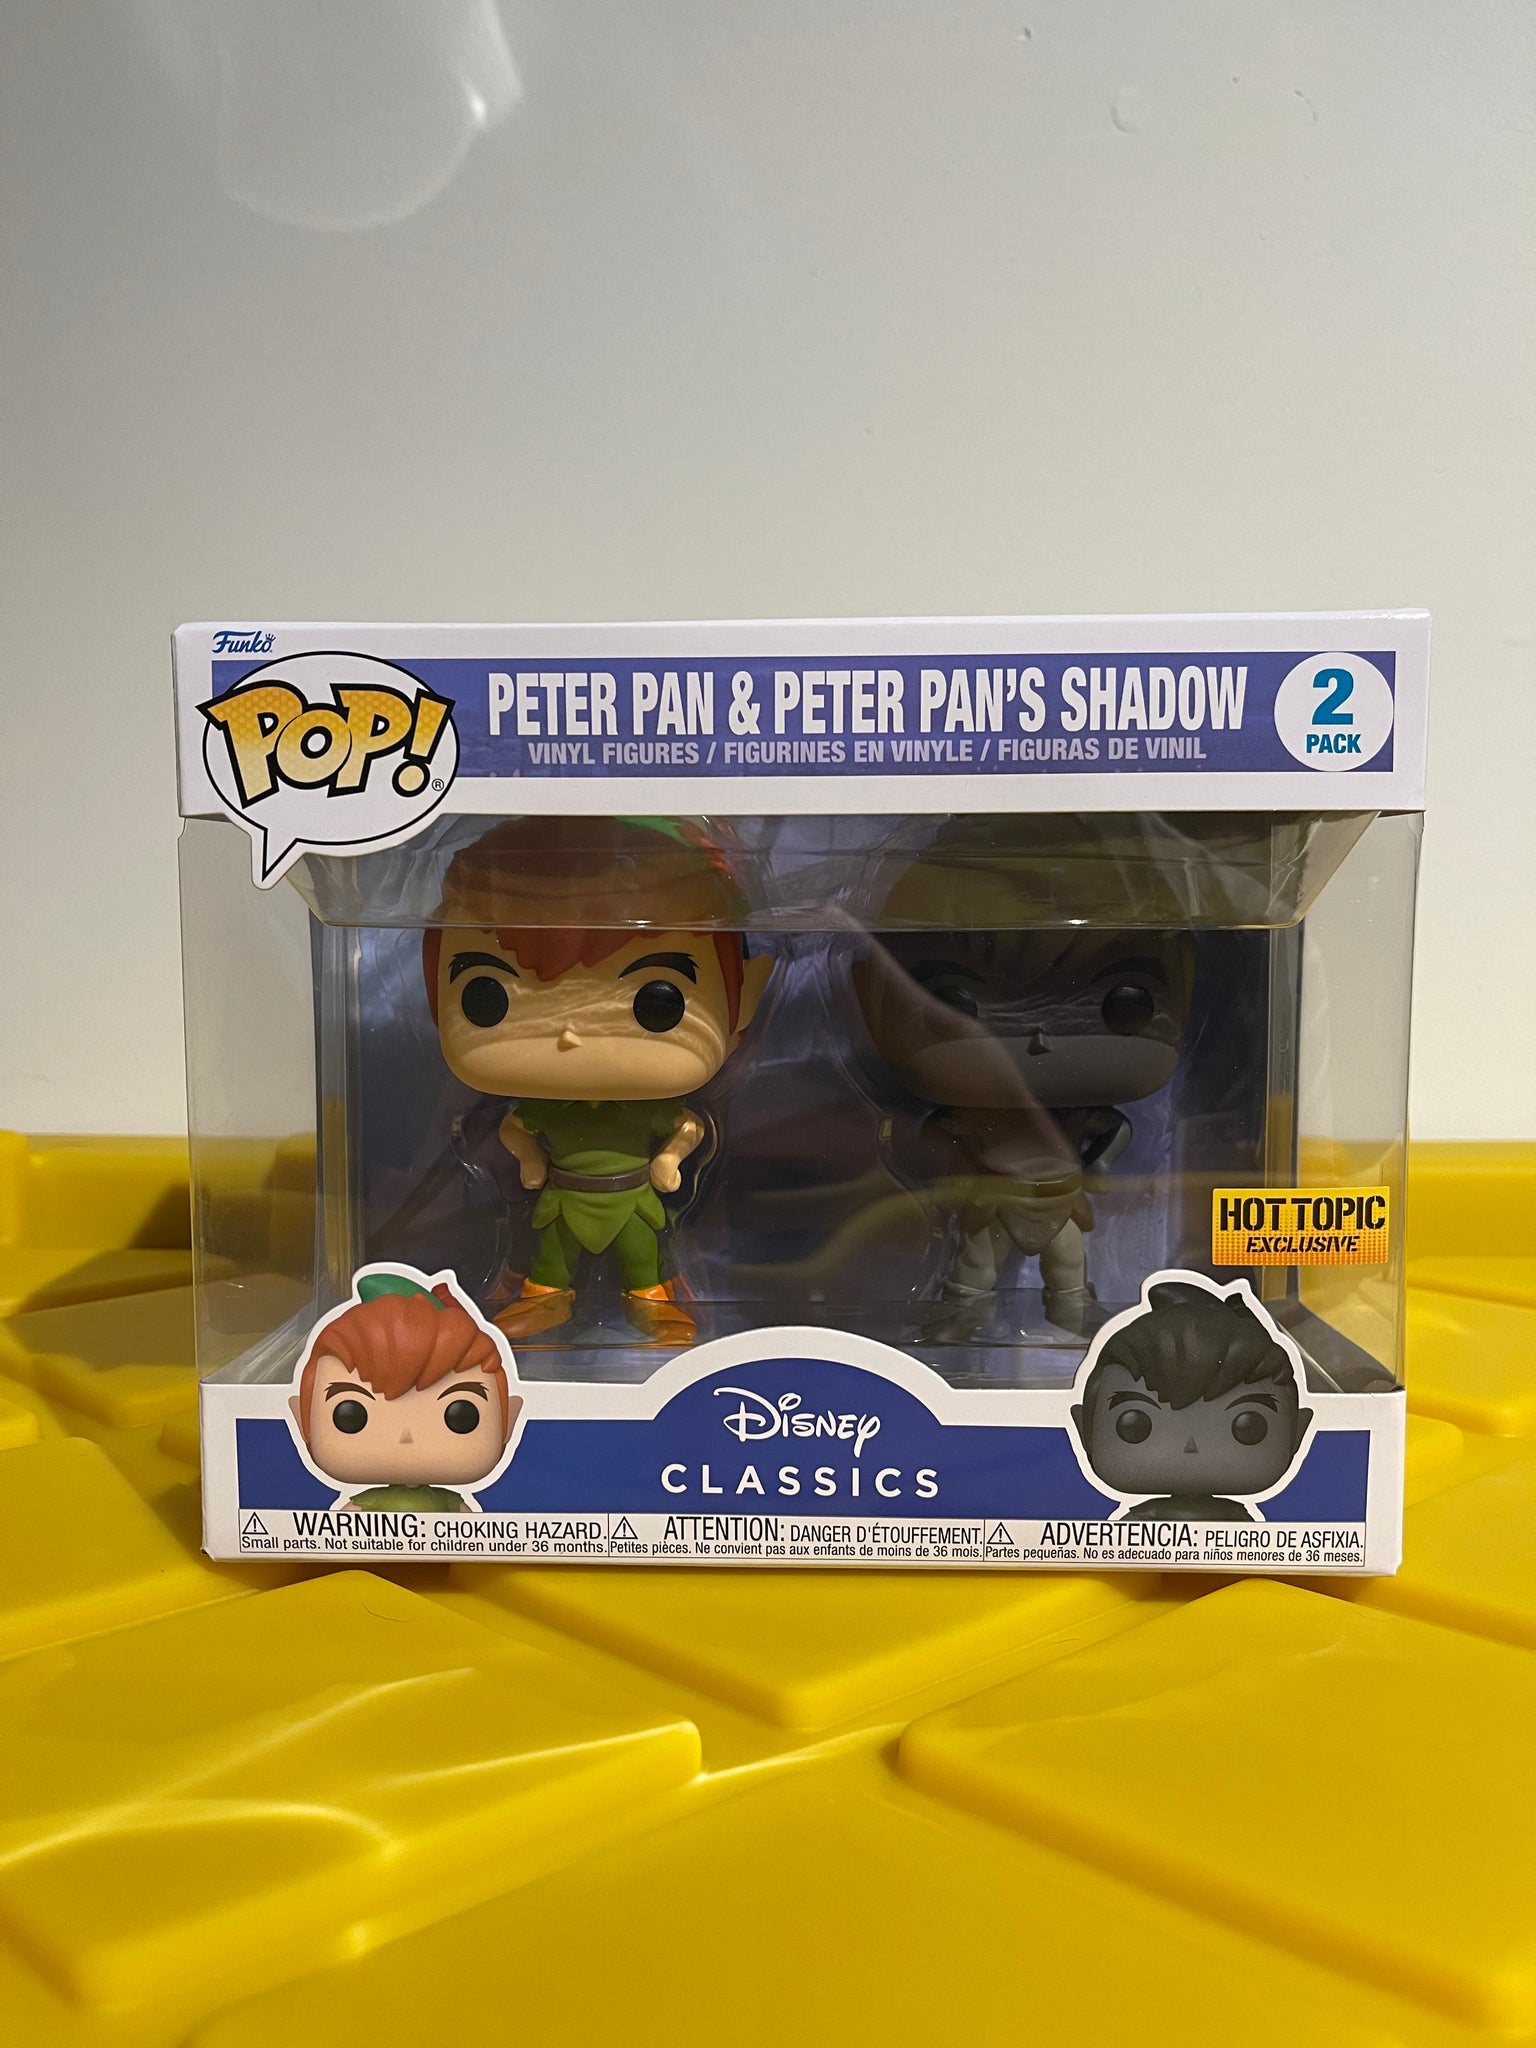 Buy Pop! Peter Pan and Peter Pan's Shadow 2-Pack at Funko.